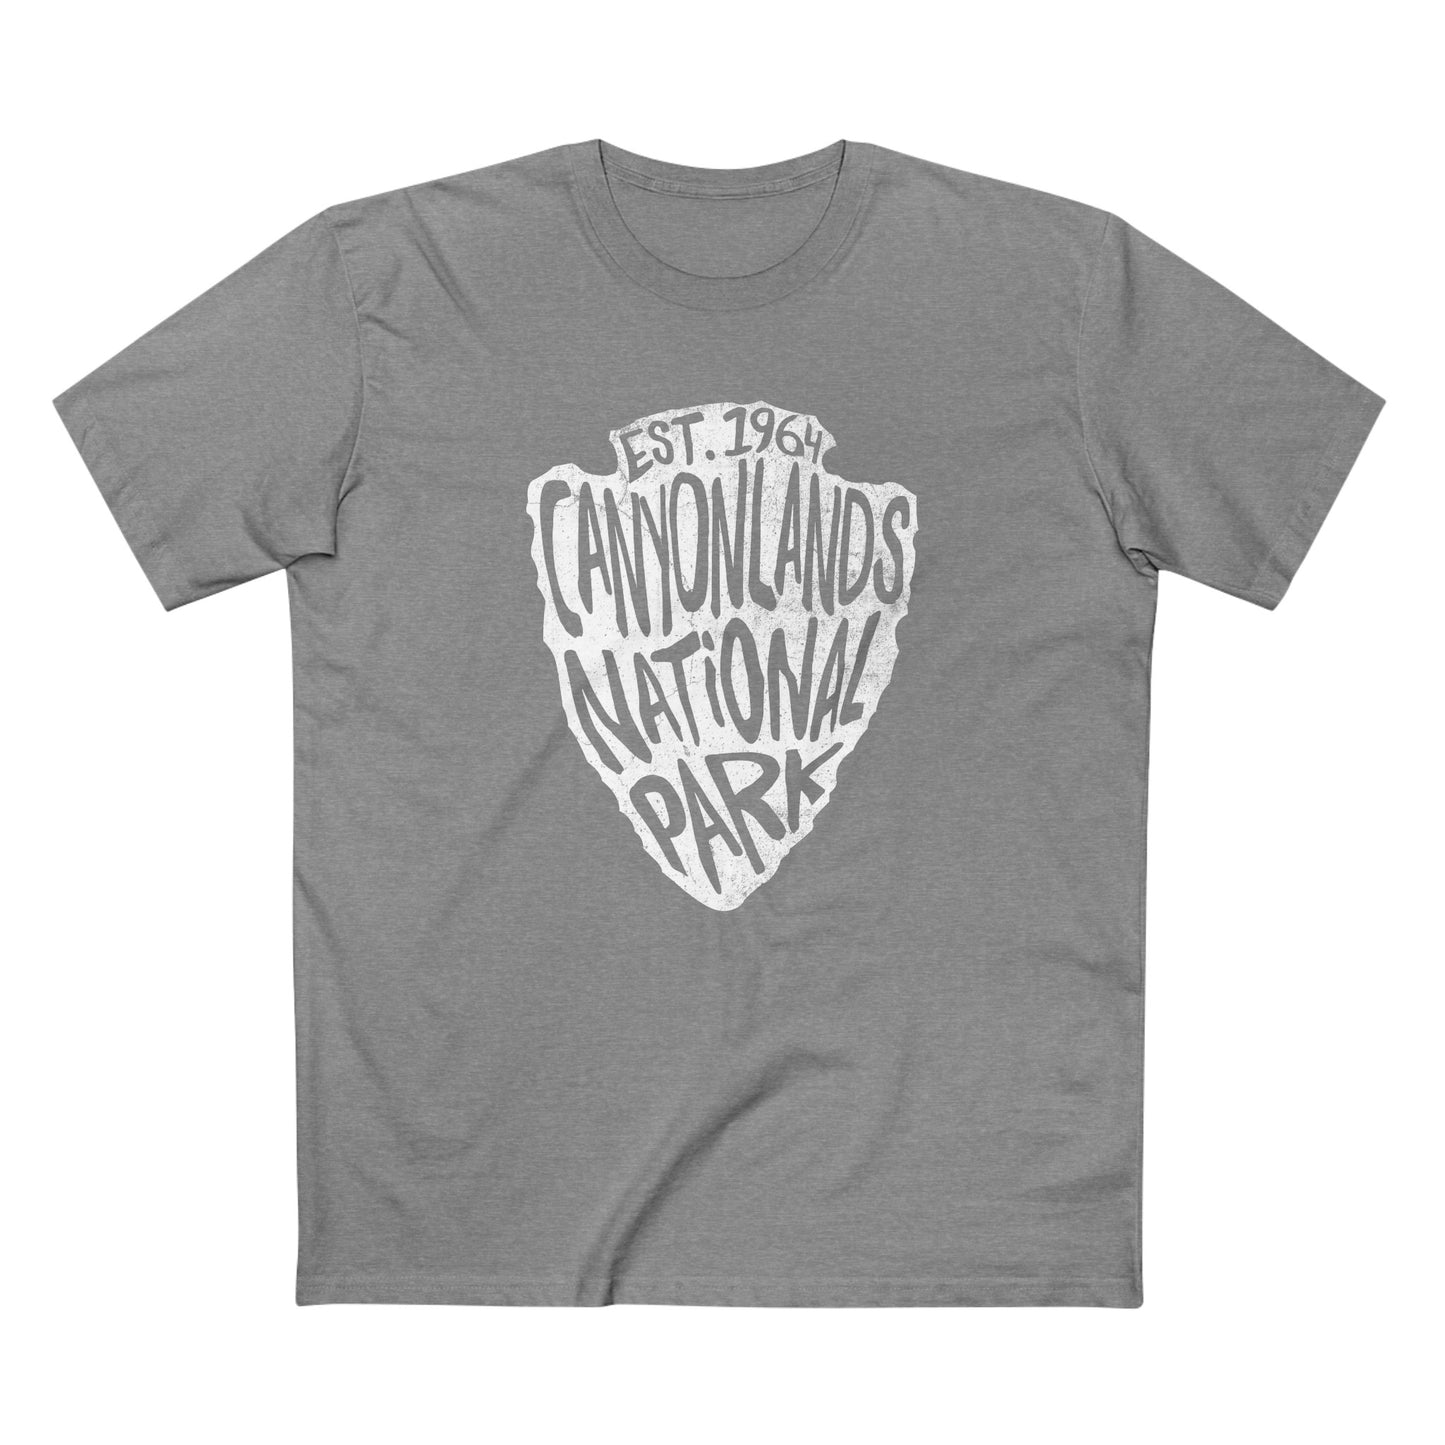 Canyonlands National Park T-Shirt - Arrowhead Design